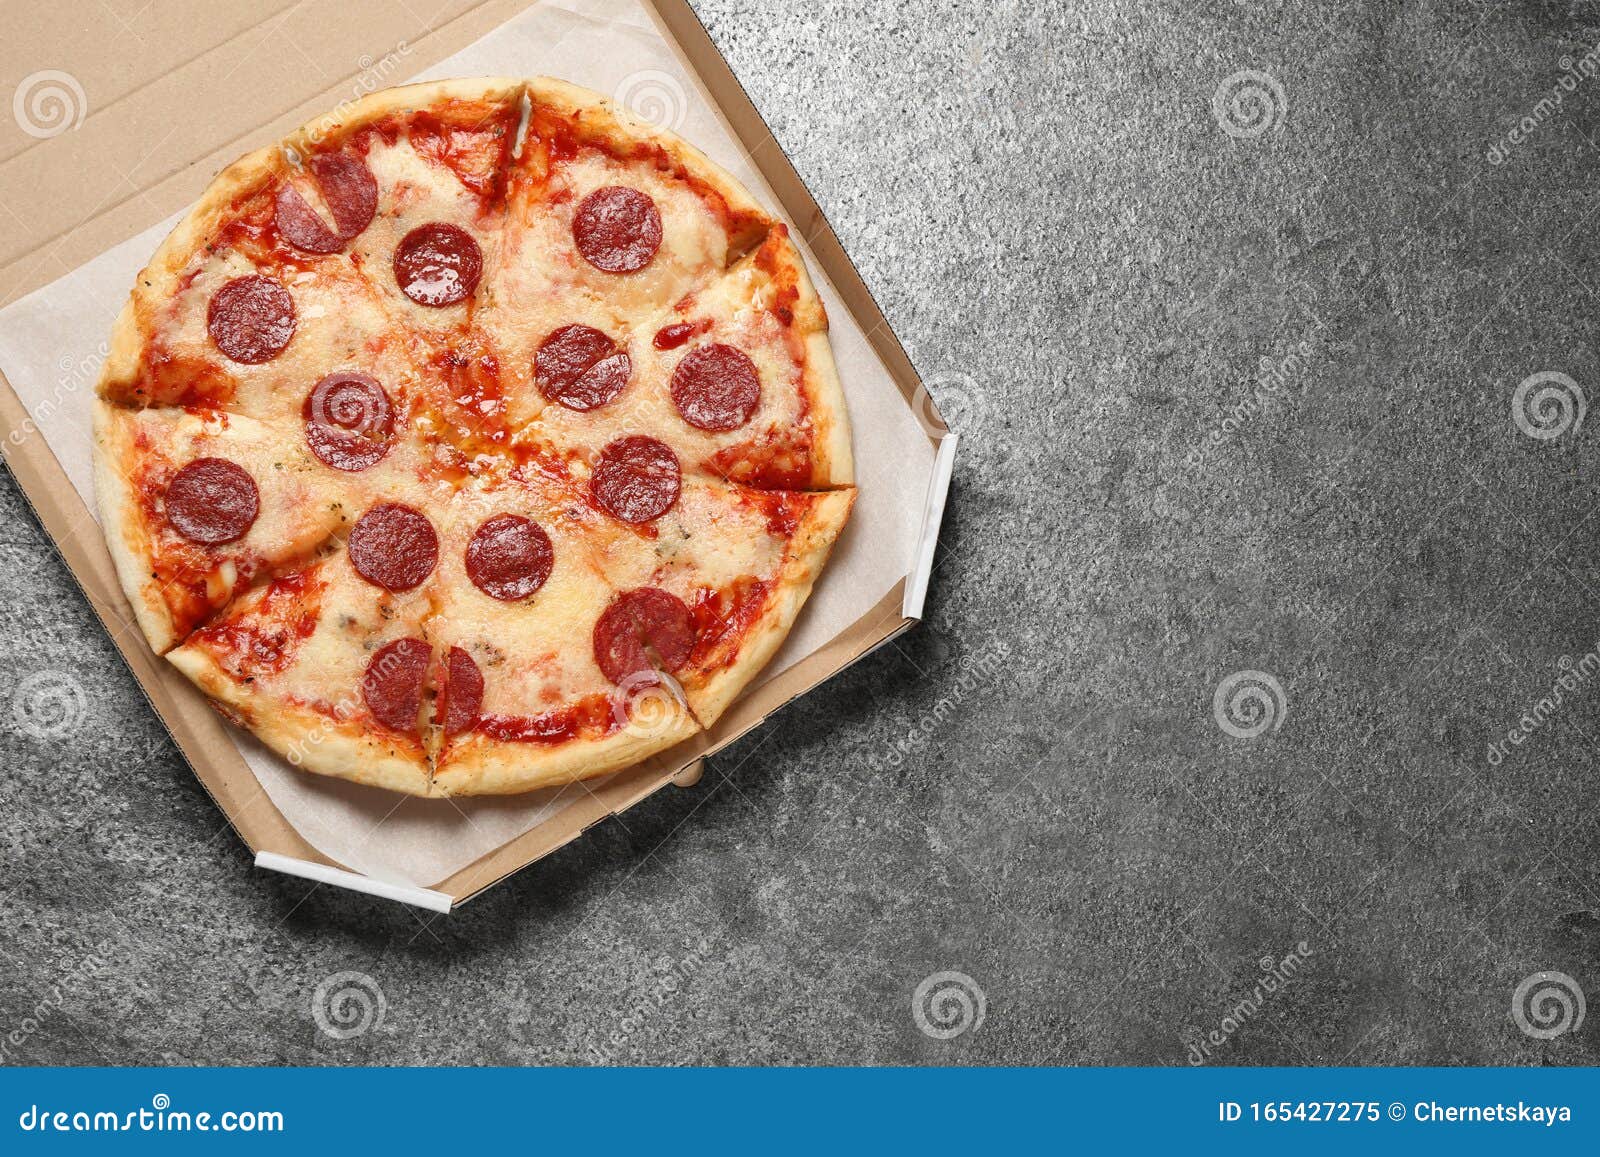 фото пиццы пепперони в коробке фото 19